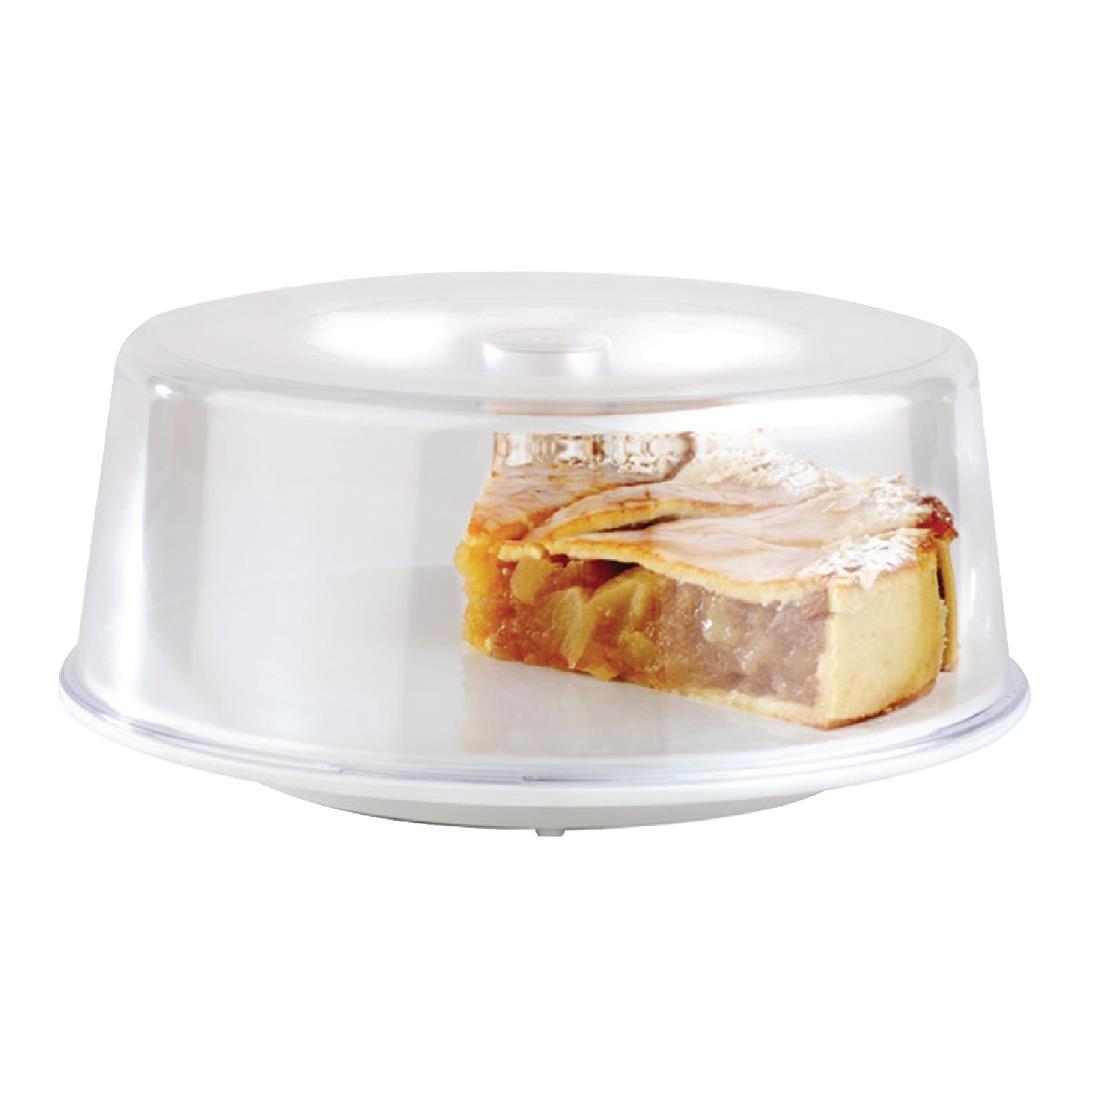 APS Pure Round Cake Platter Lid Plastic - GF154  - 2